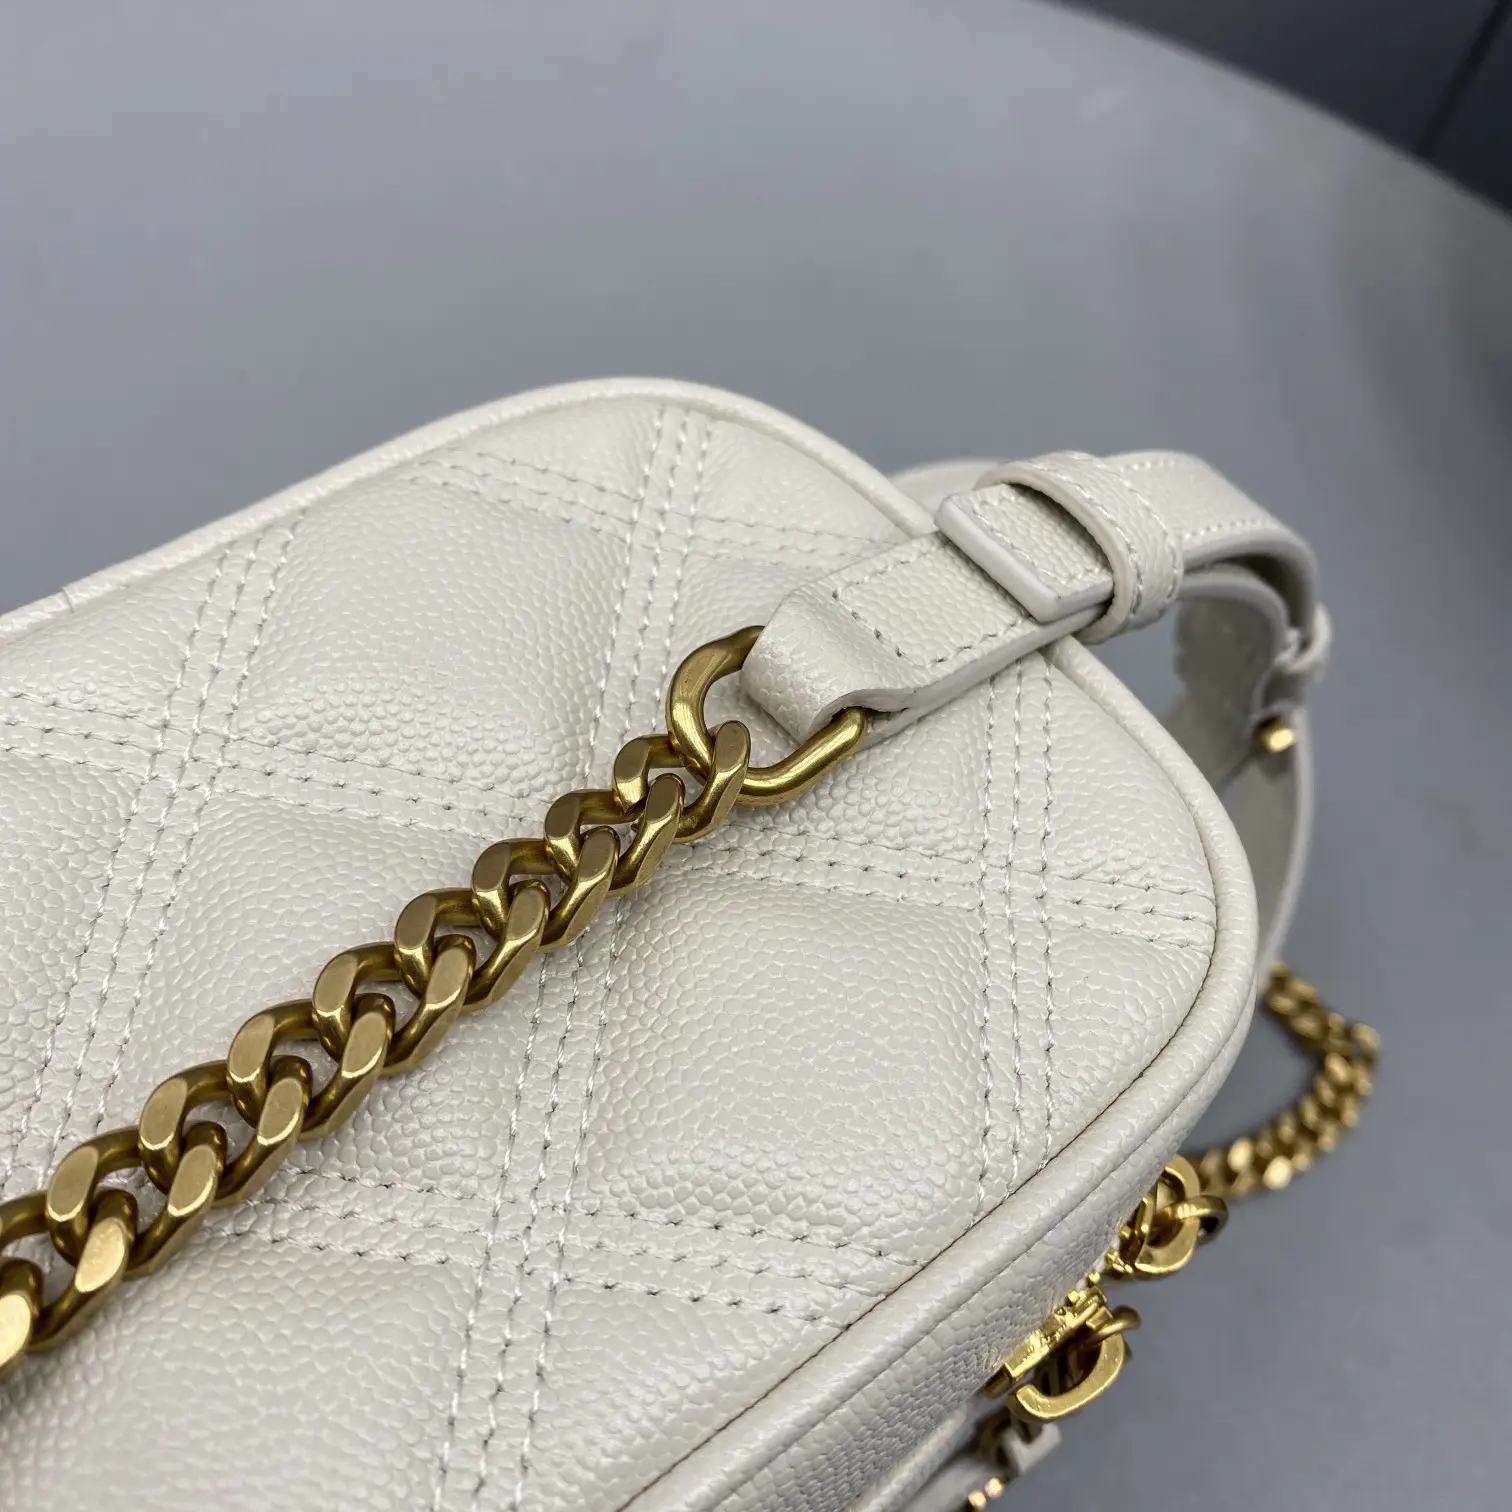 YSL Vanity Handbags